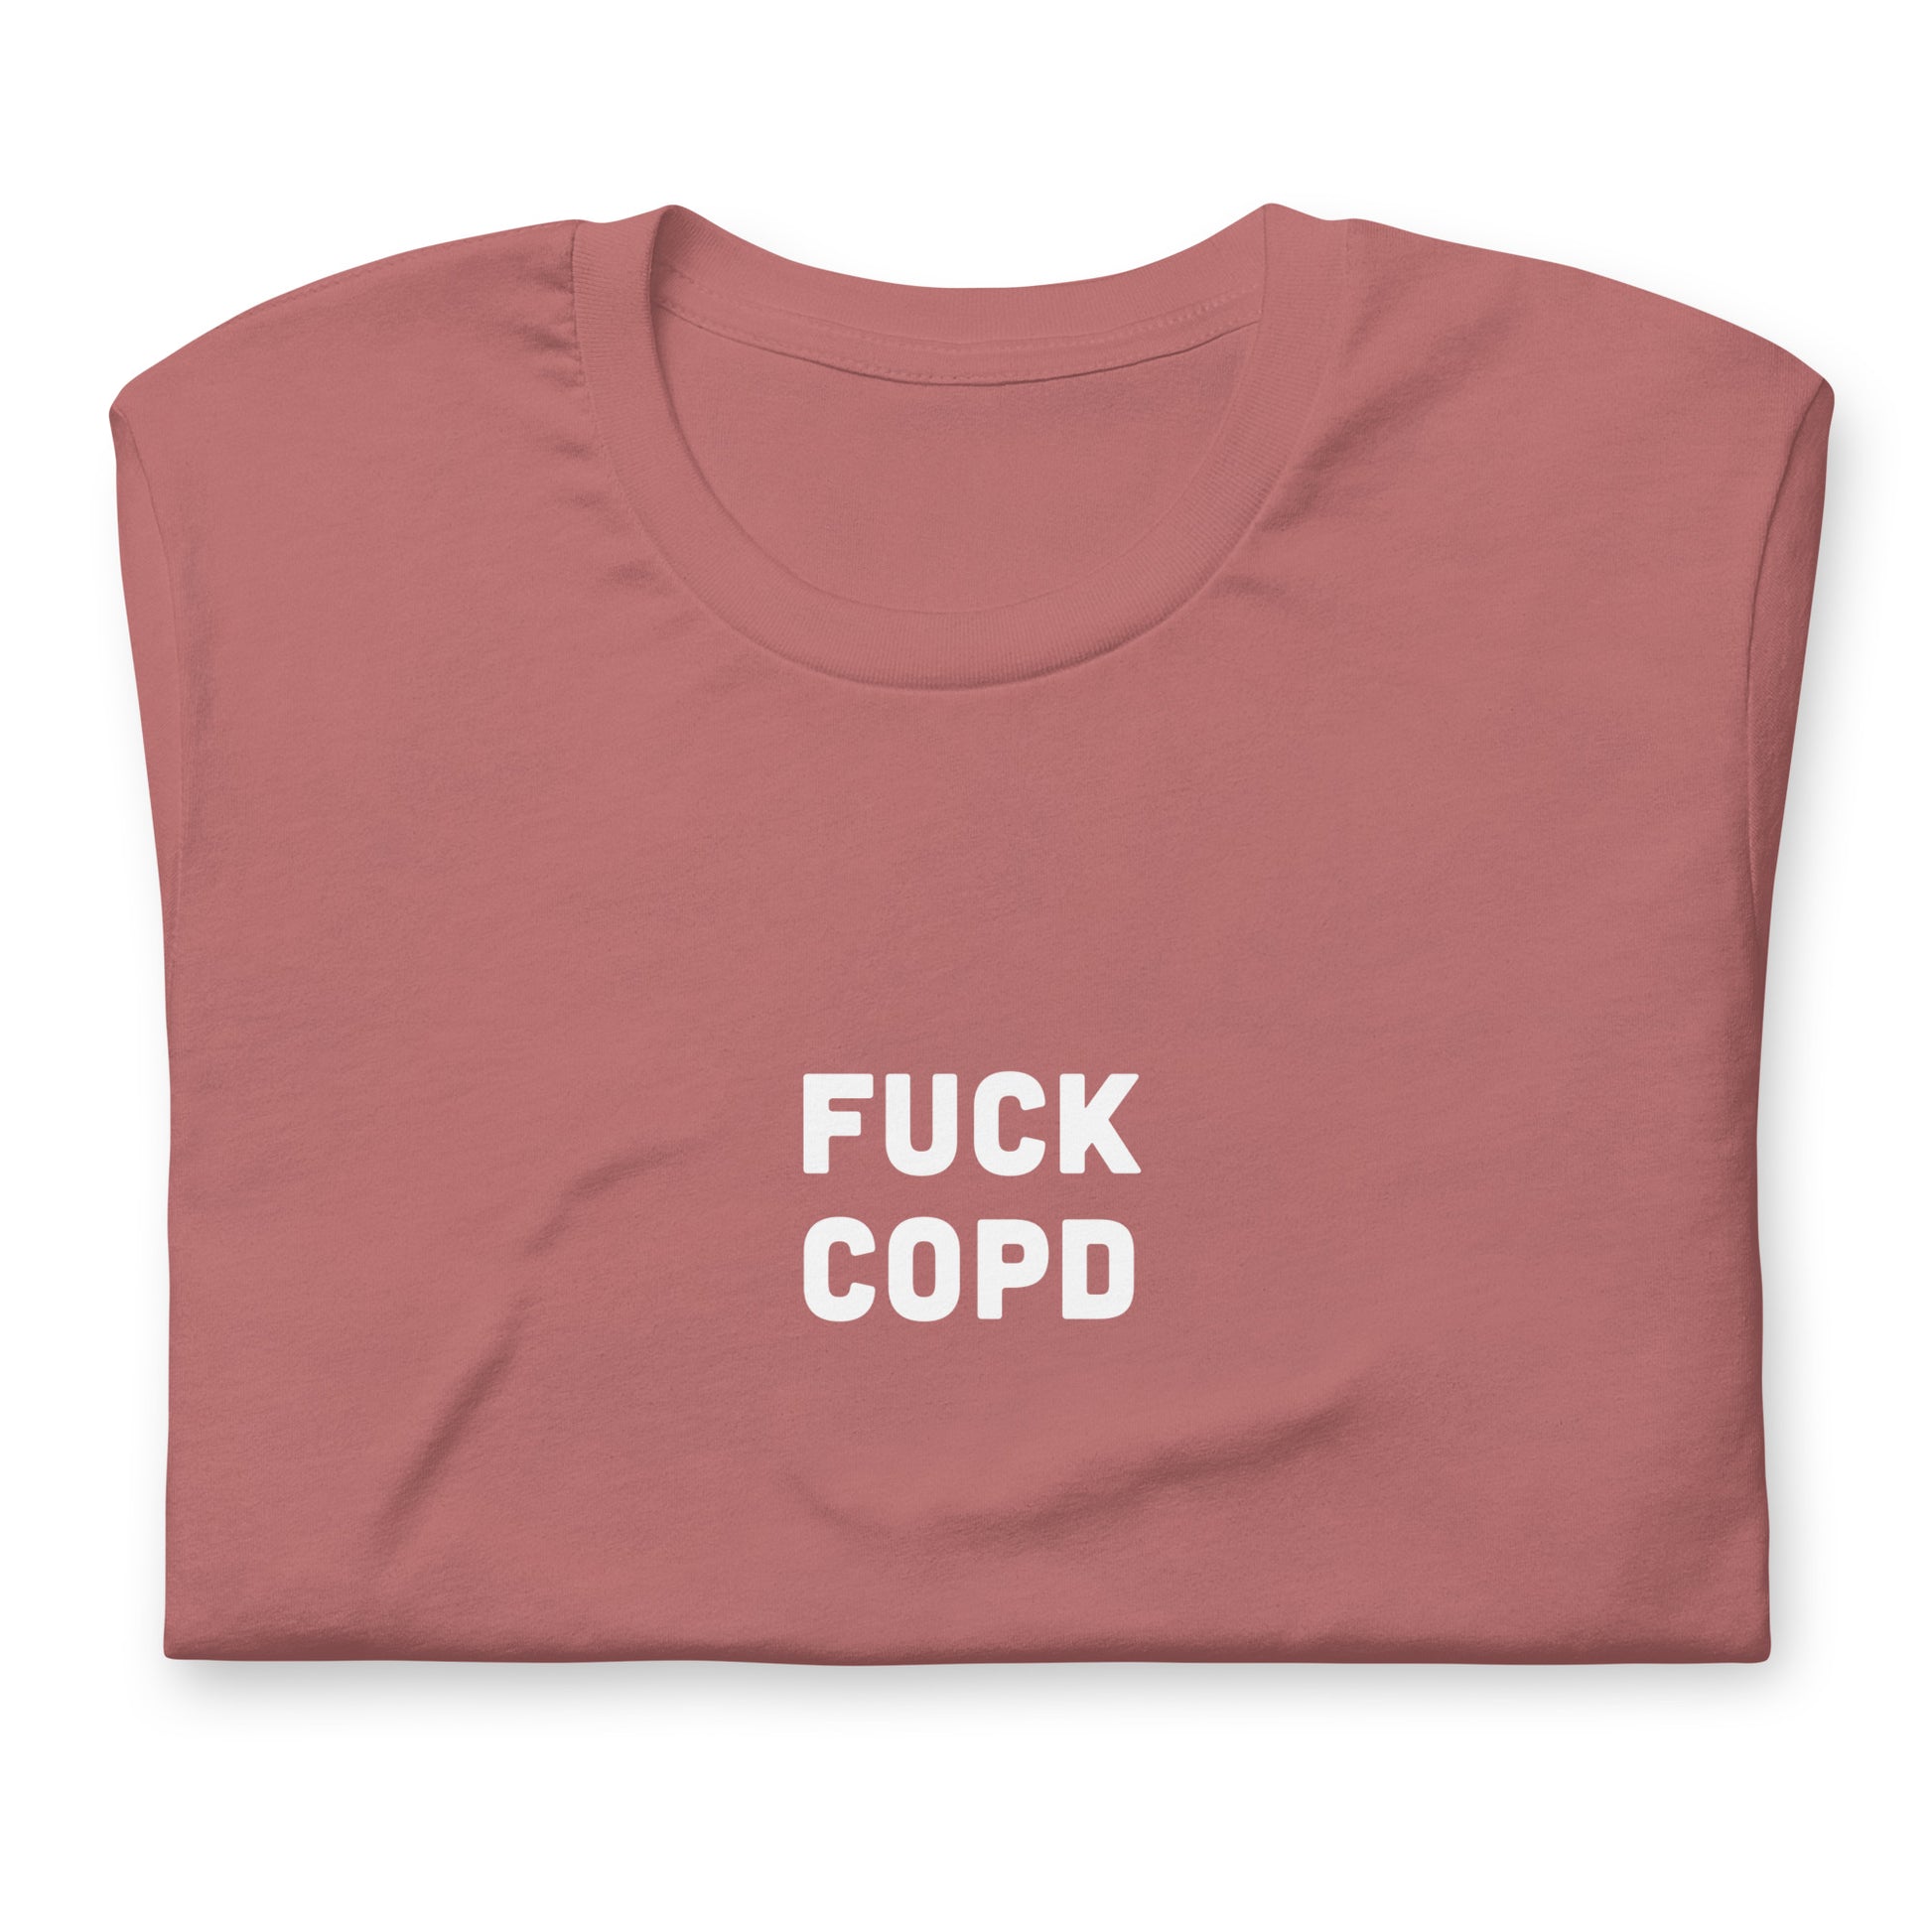 Fuck Copd T-Shirt Size XL Color Navy